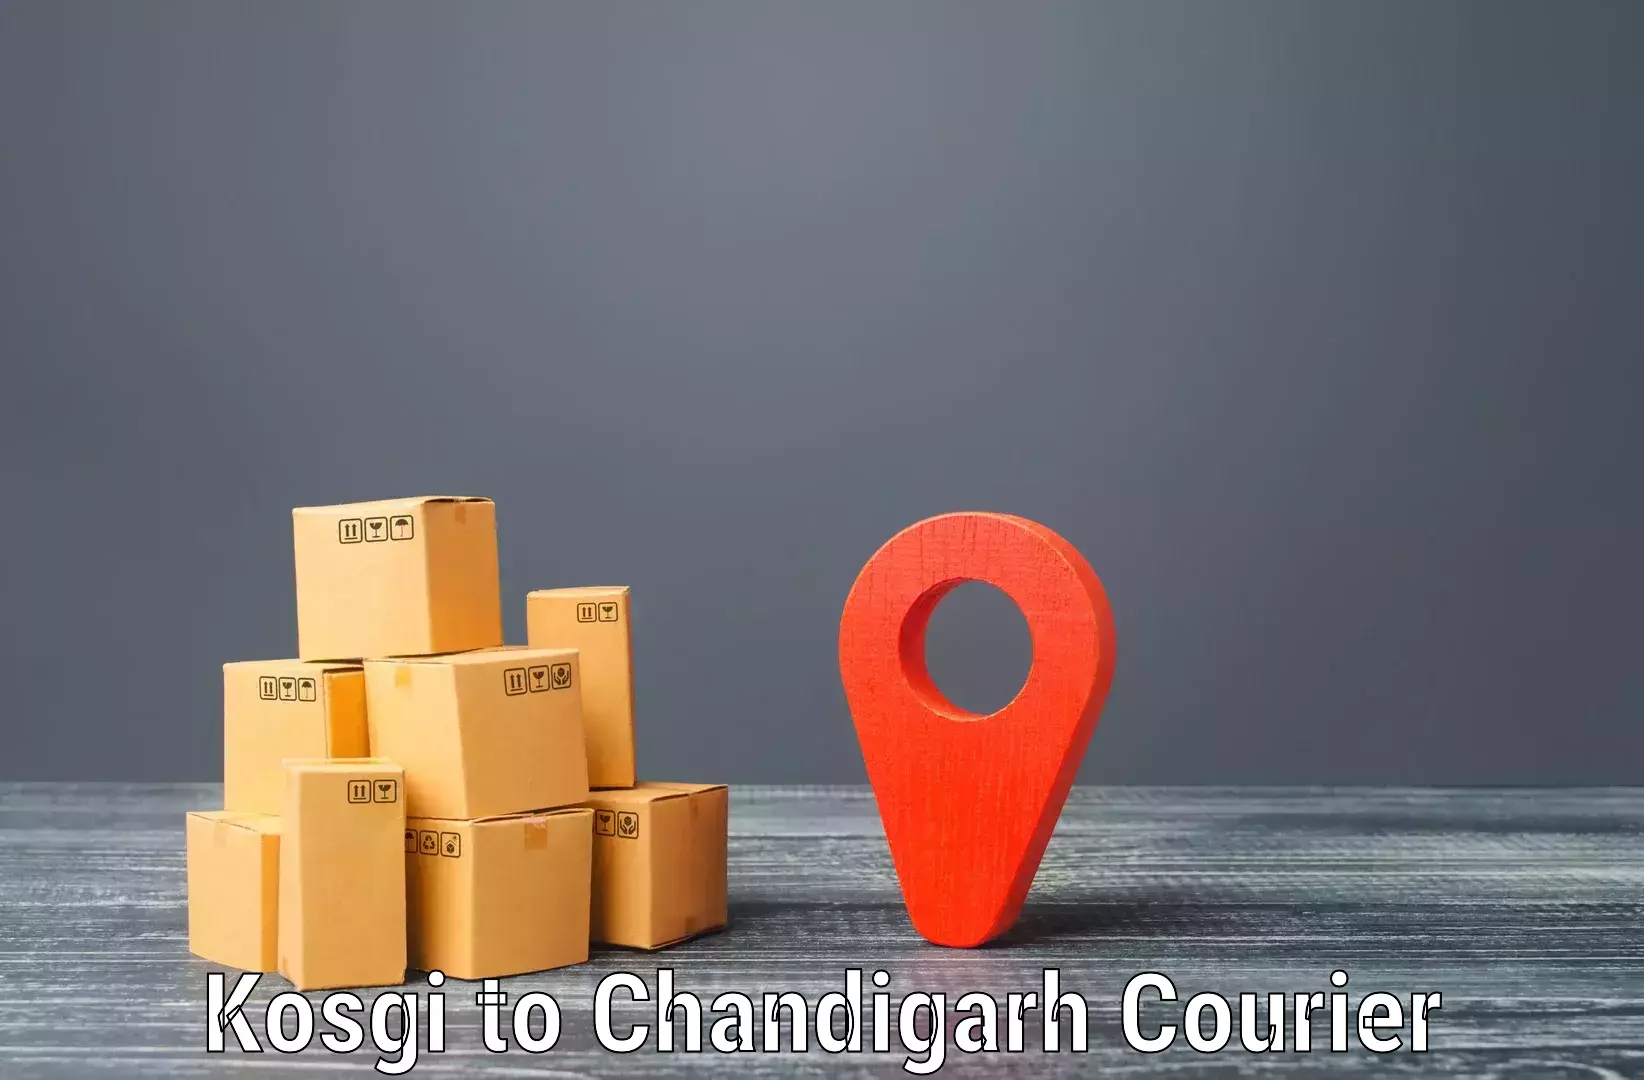 Courier service innovation Kosgi to Chandigarh